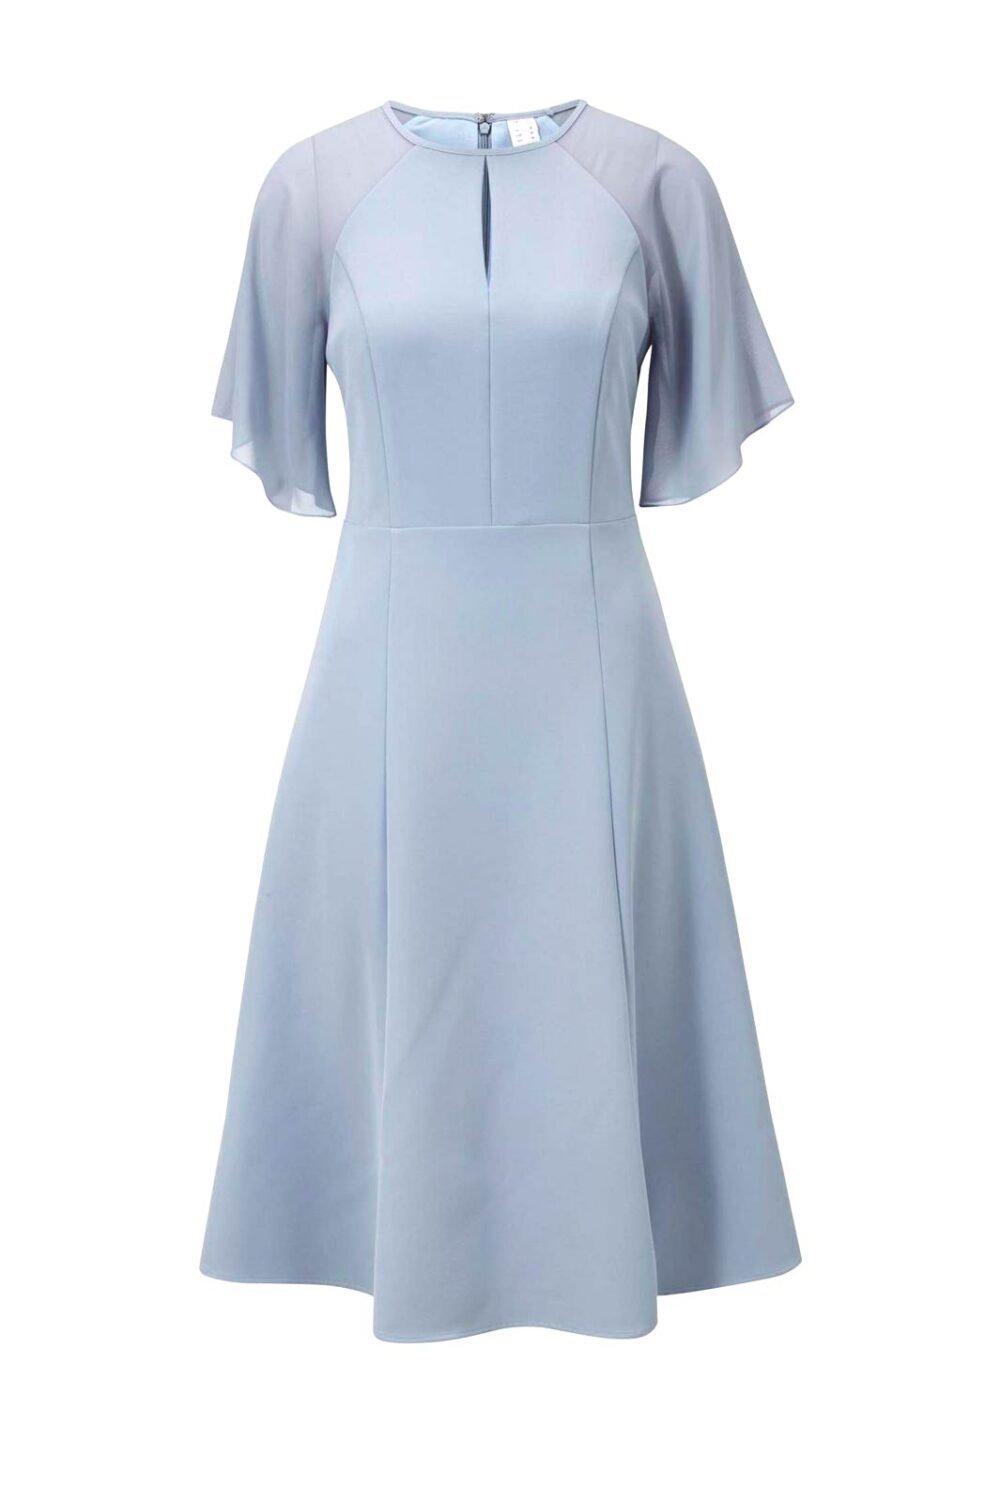 HEINE Damen Minikleid Kleid Hellblau missforty